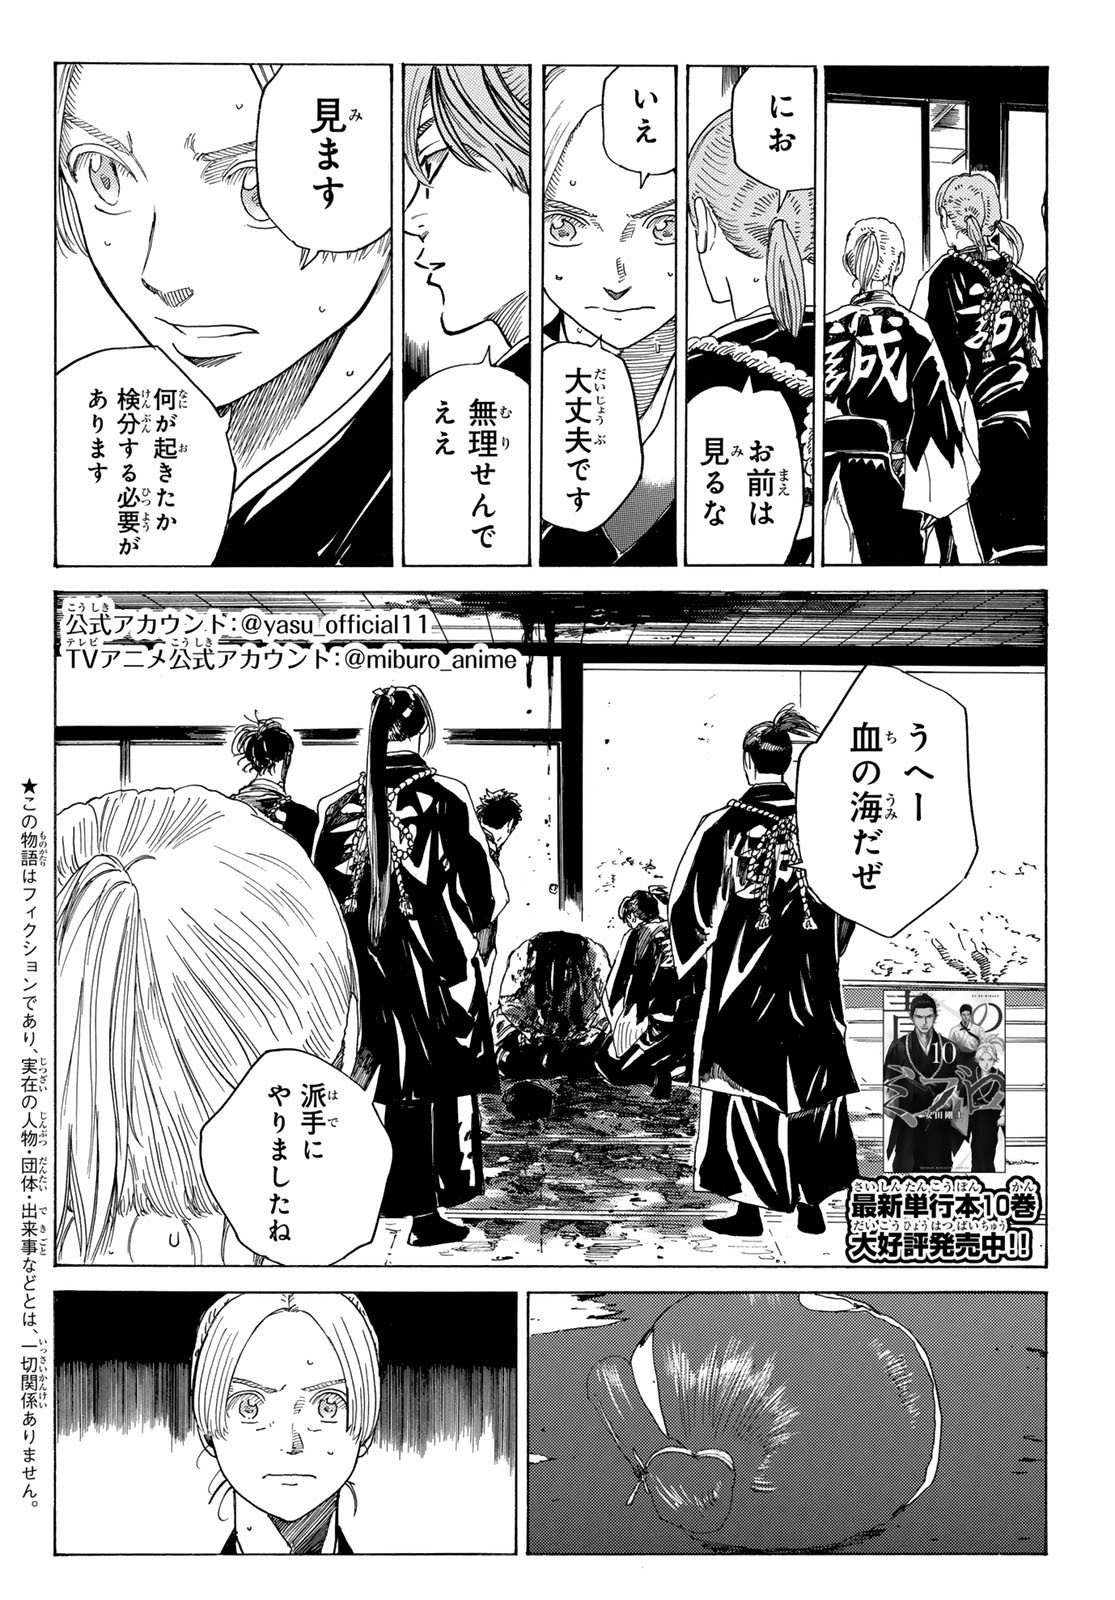 Ao no Miburo - Chapter 096 - Page 2